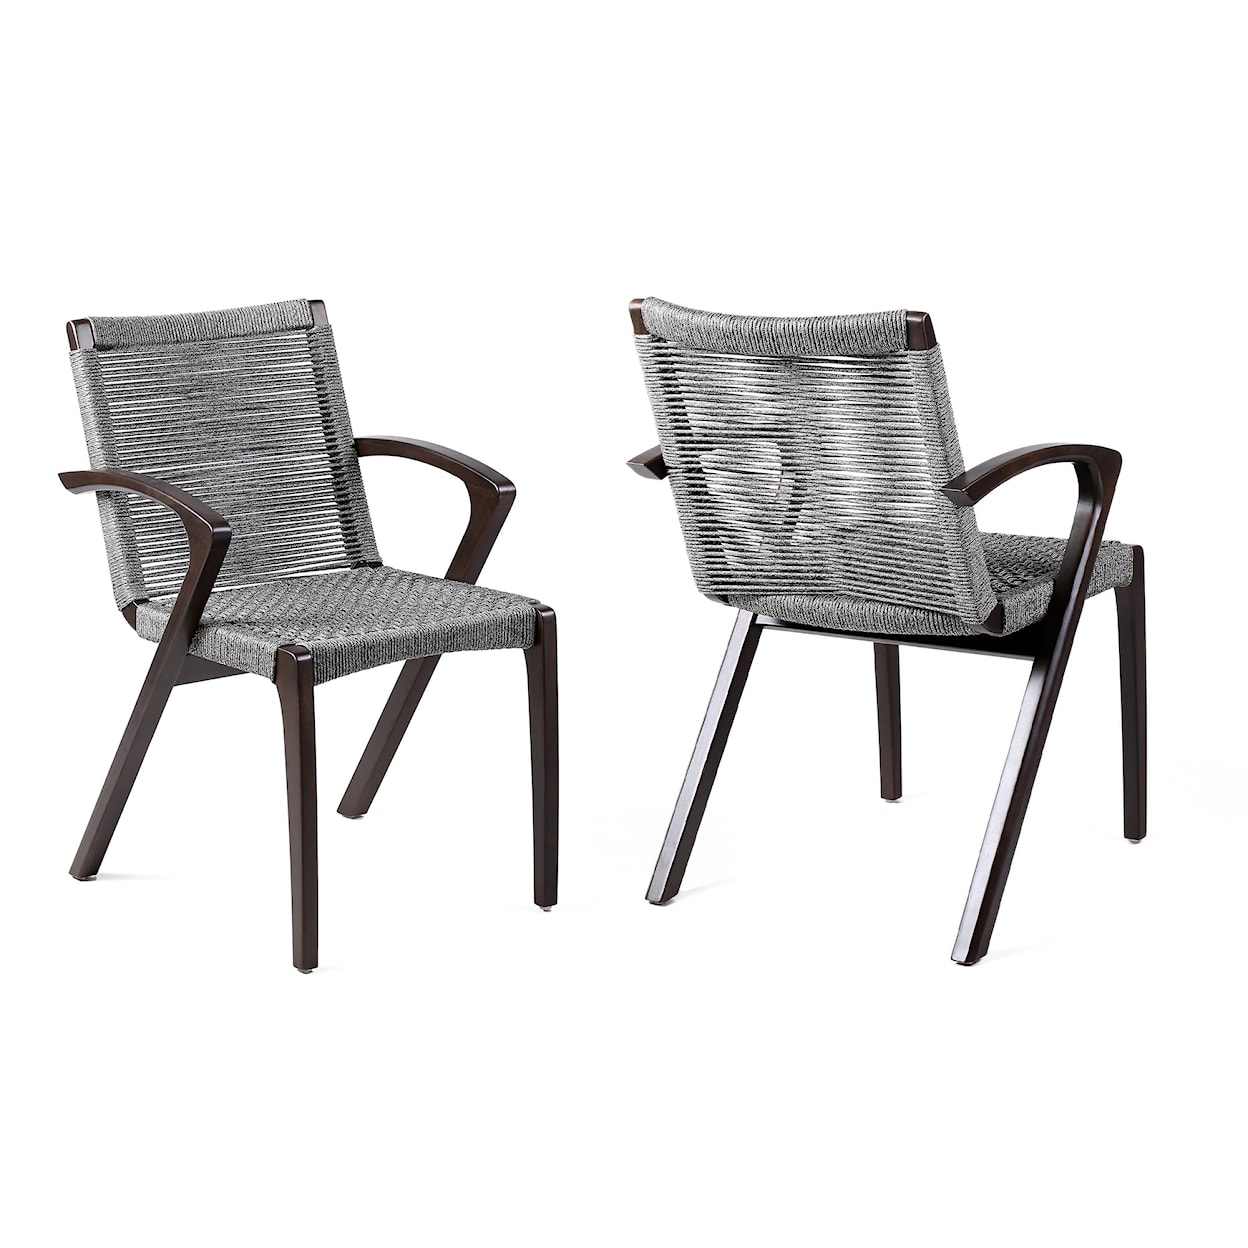 Armen Living Nabila Set of 2 Outdoor Arm Chairs